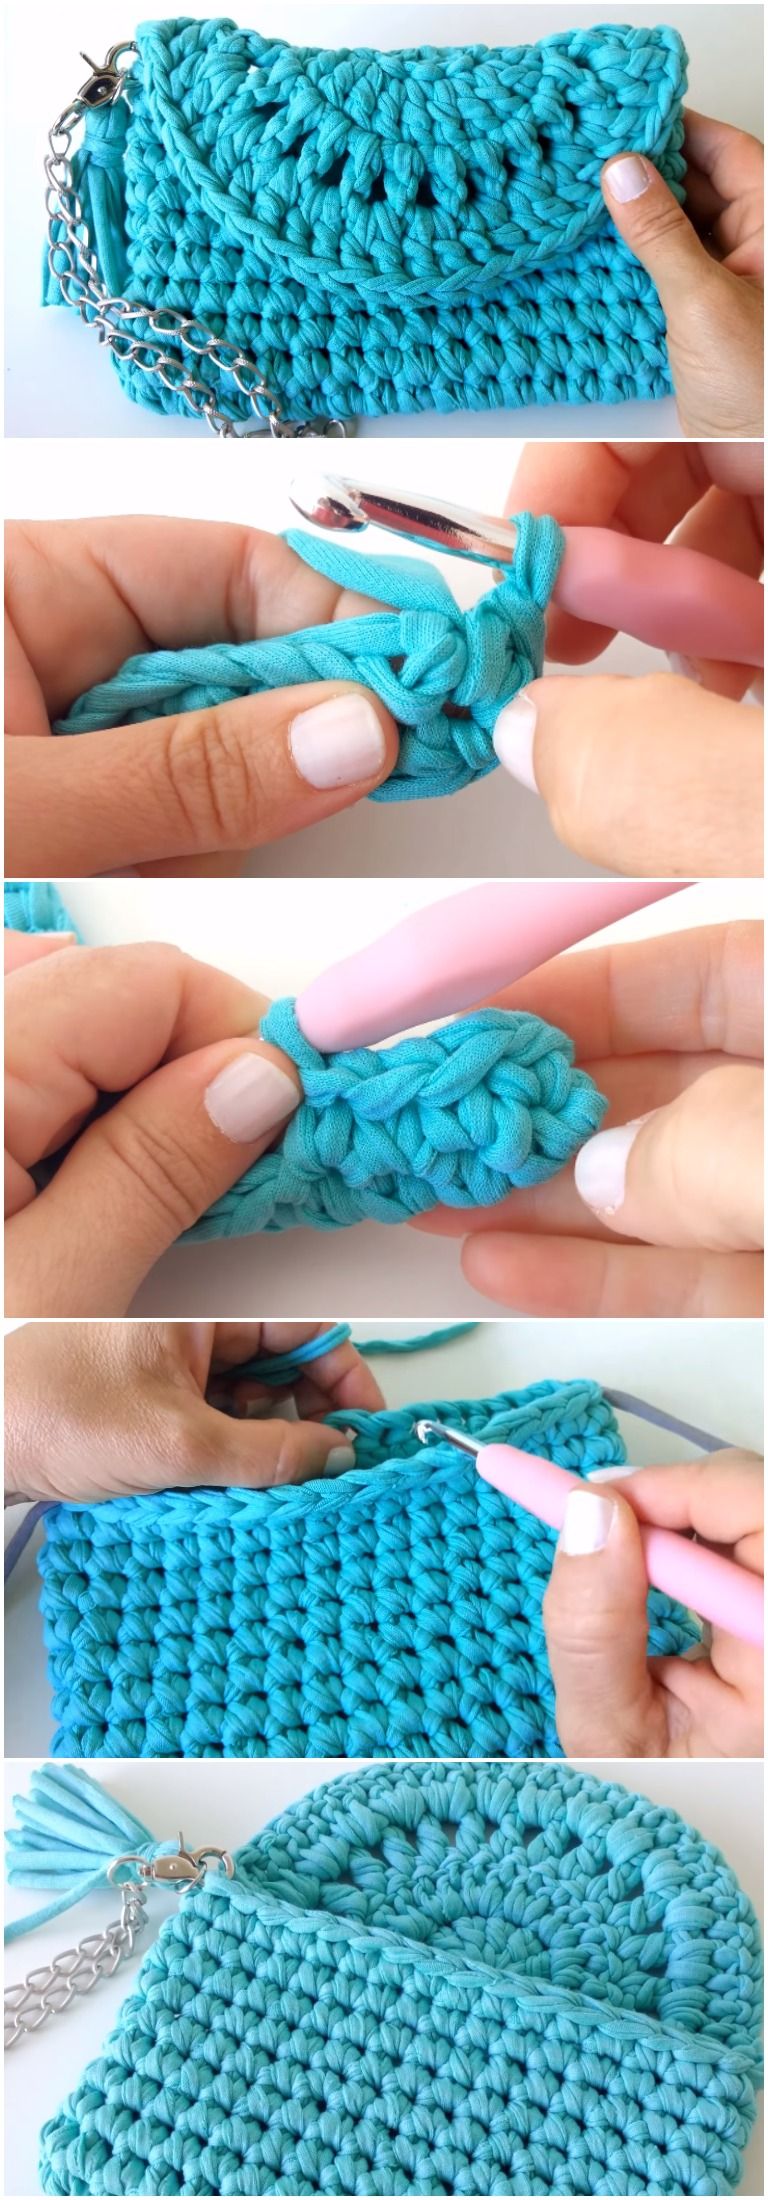 Crochet Beautiful Handbag Free Pattern [Video]